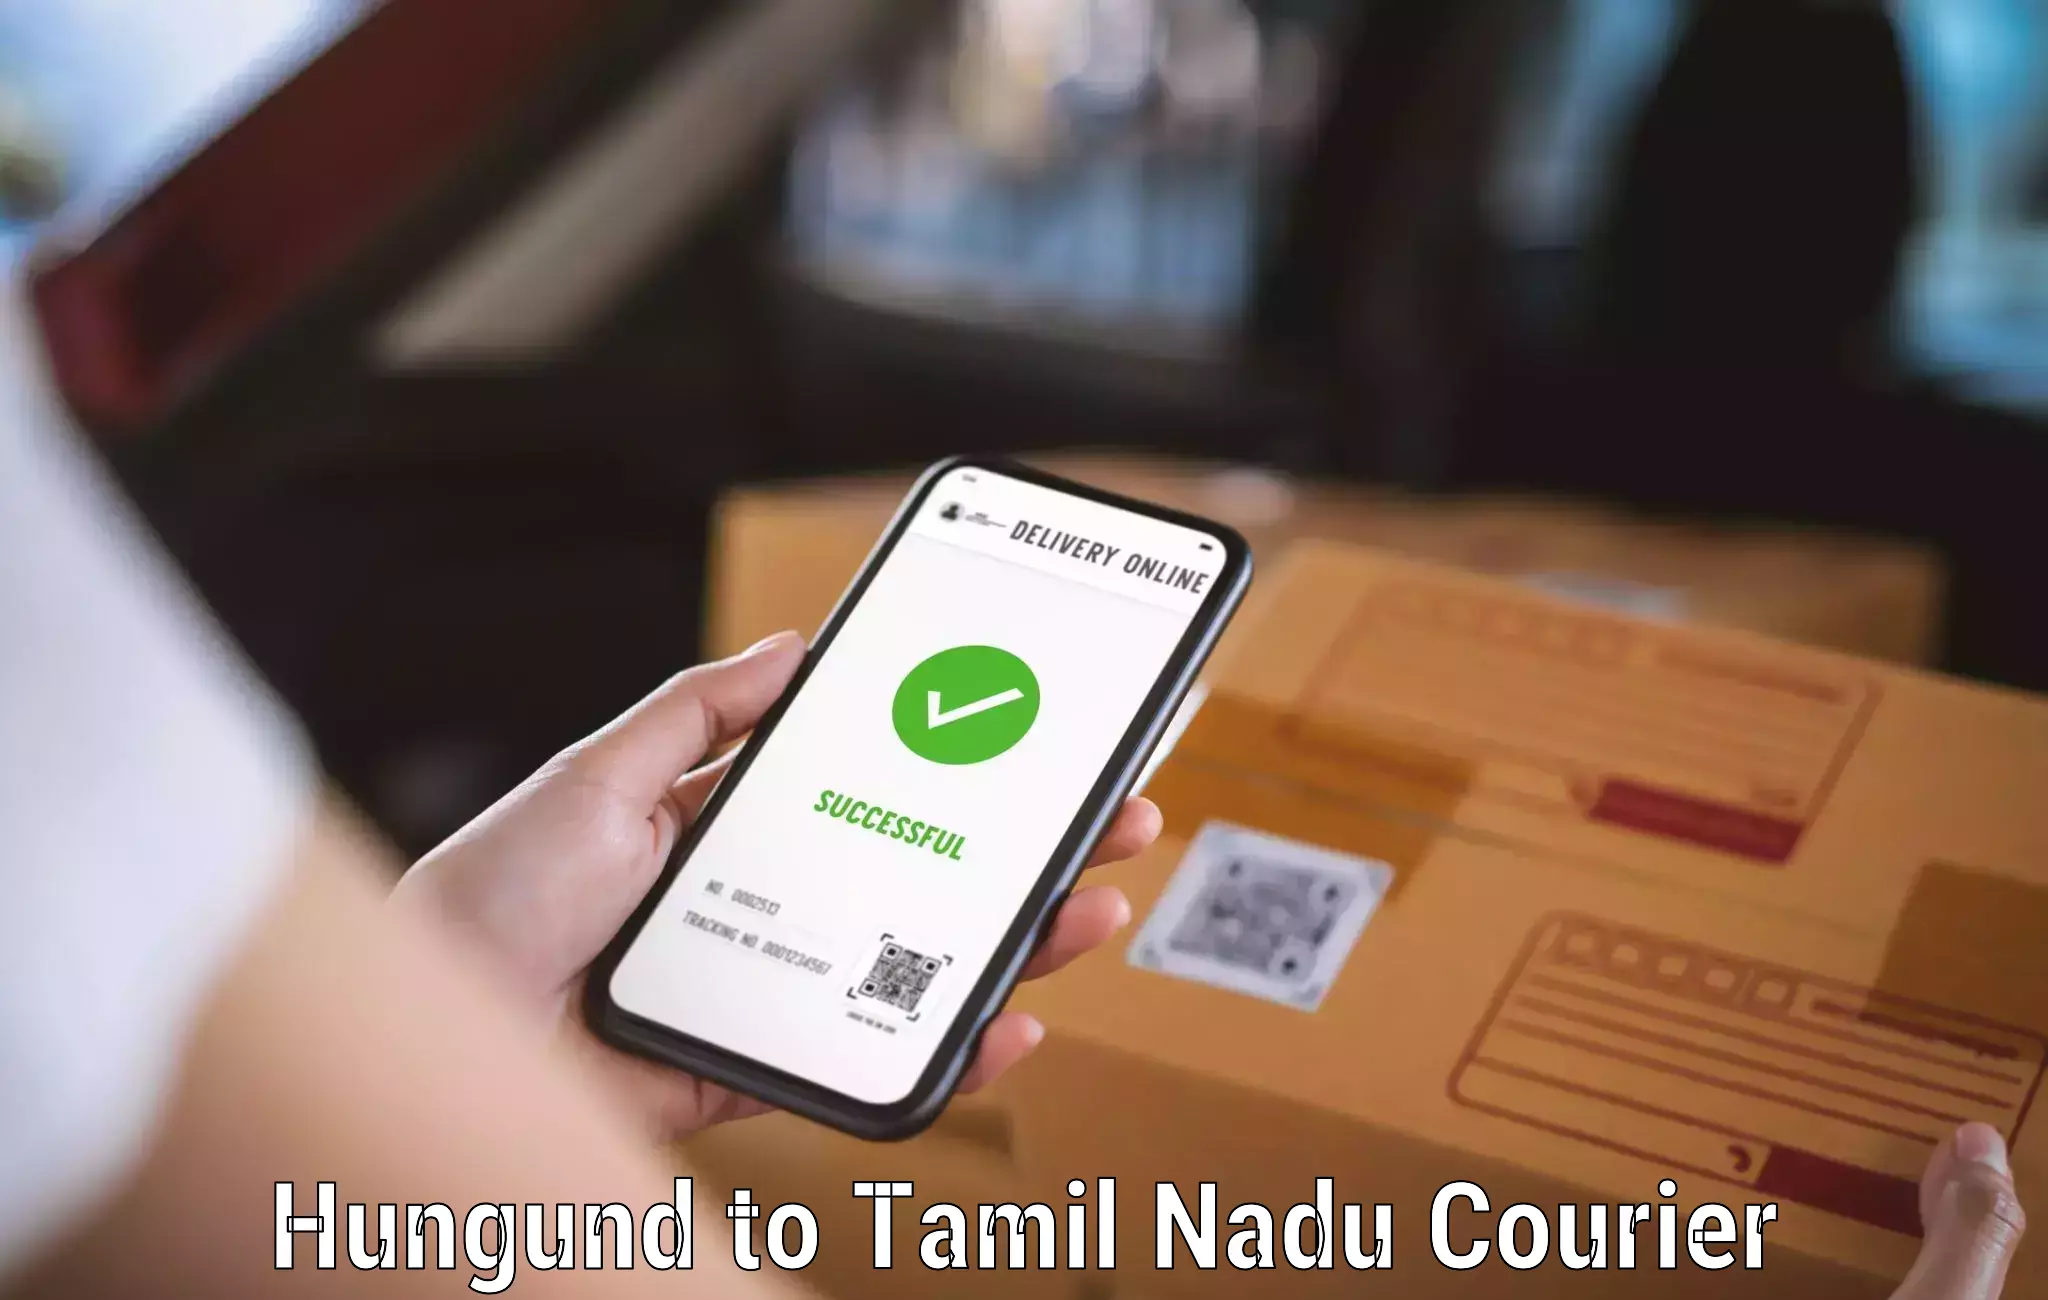 Online courier booking Hungund to Tamil Nadu